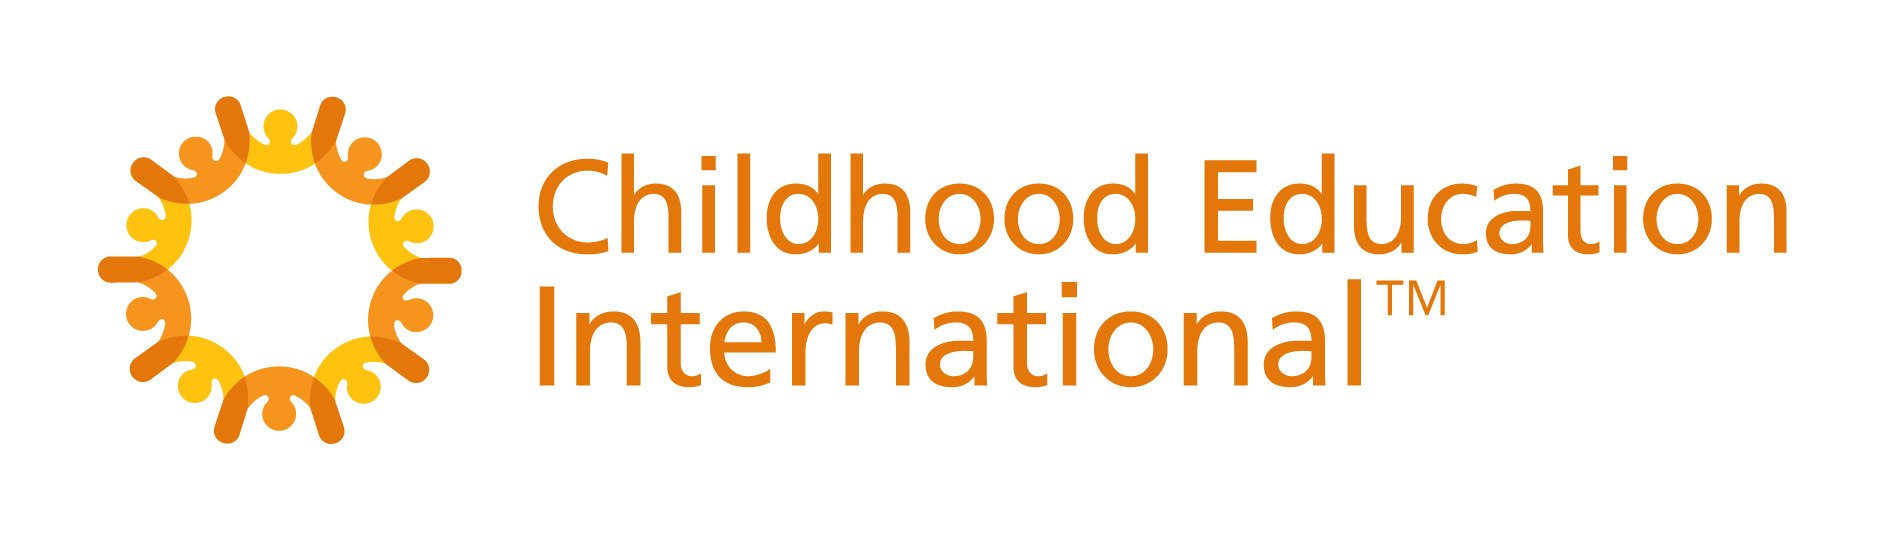 Childhood Education International logo